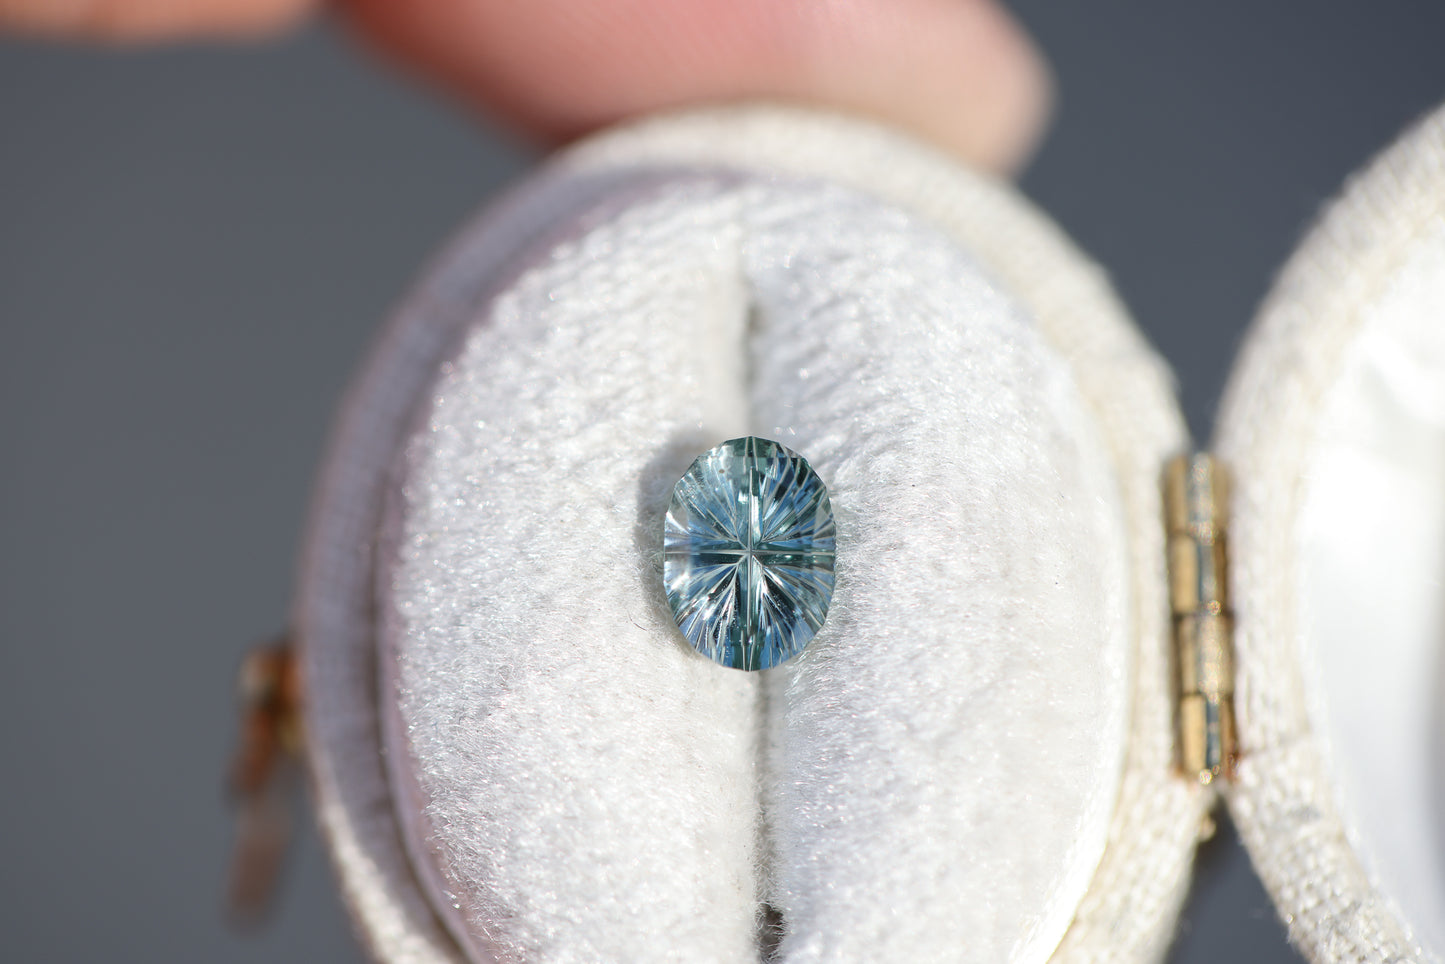 1.08ct oval light teal sapphire - Starbrite cut by John Dyer